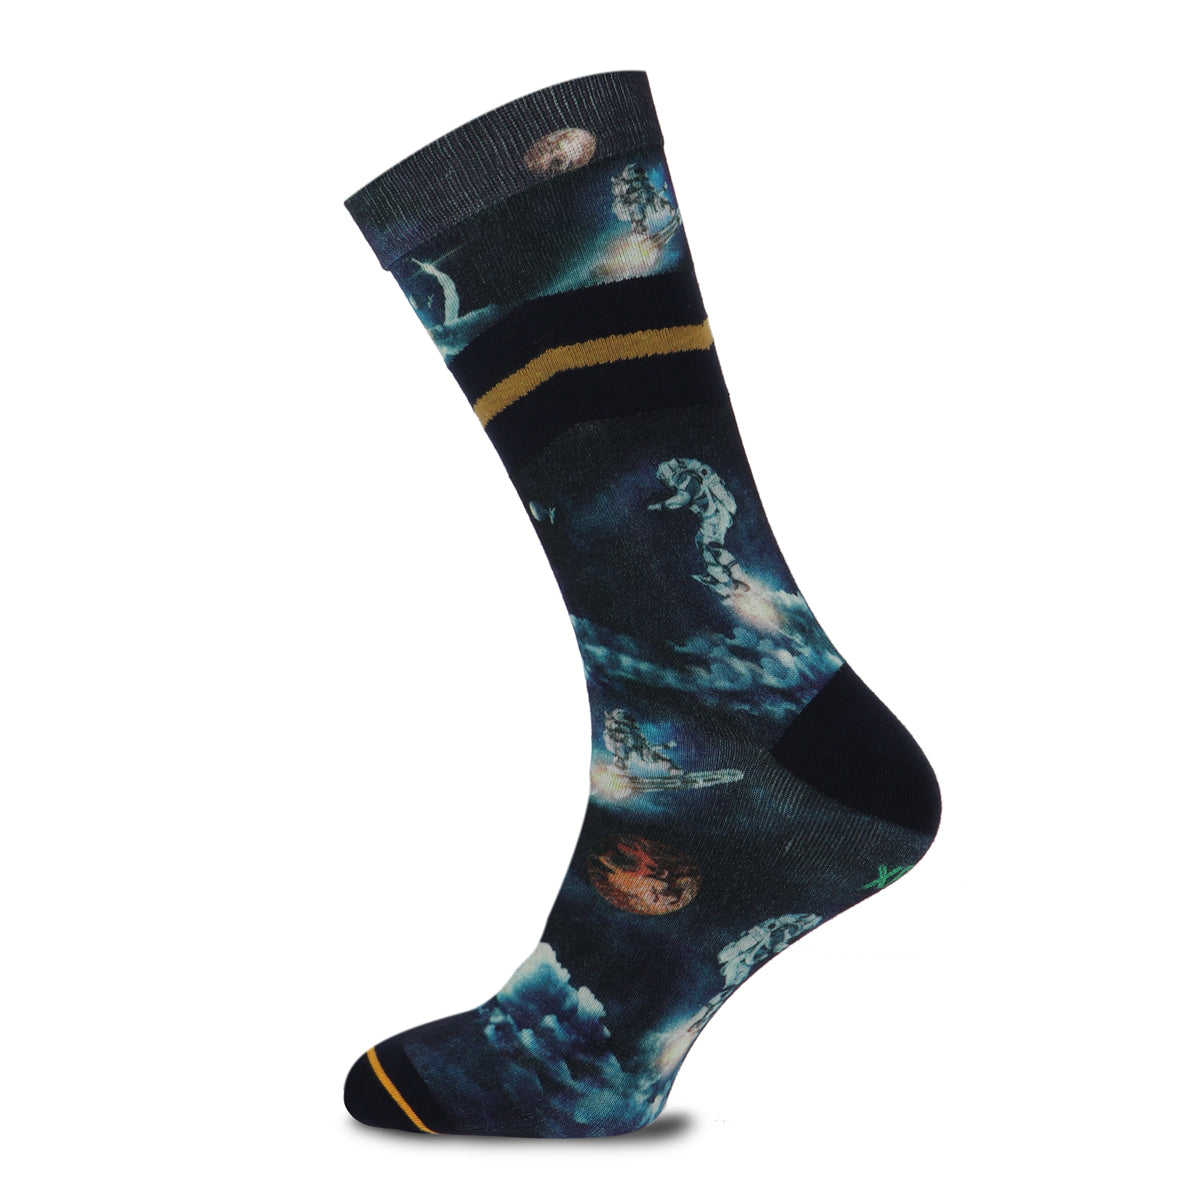 Spaceboarding Bamboo men's socks